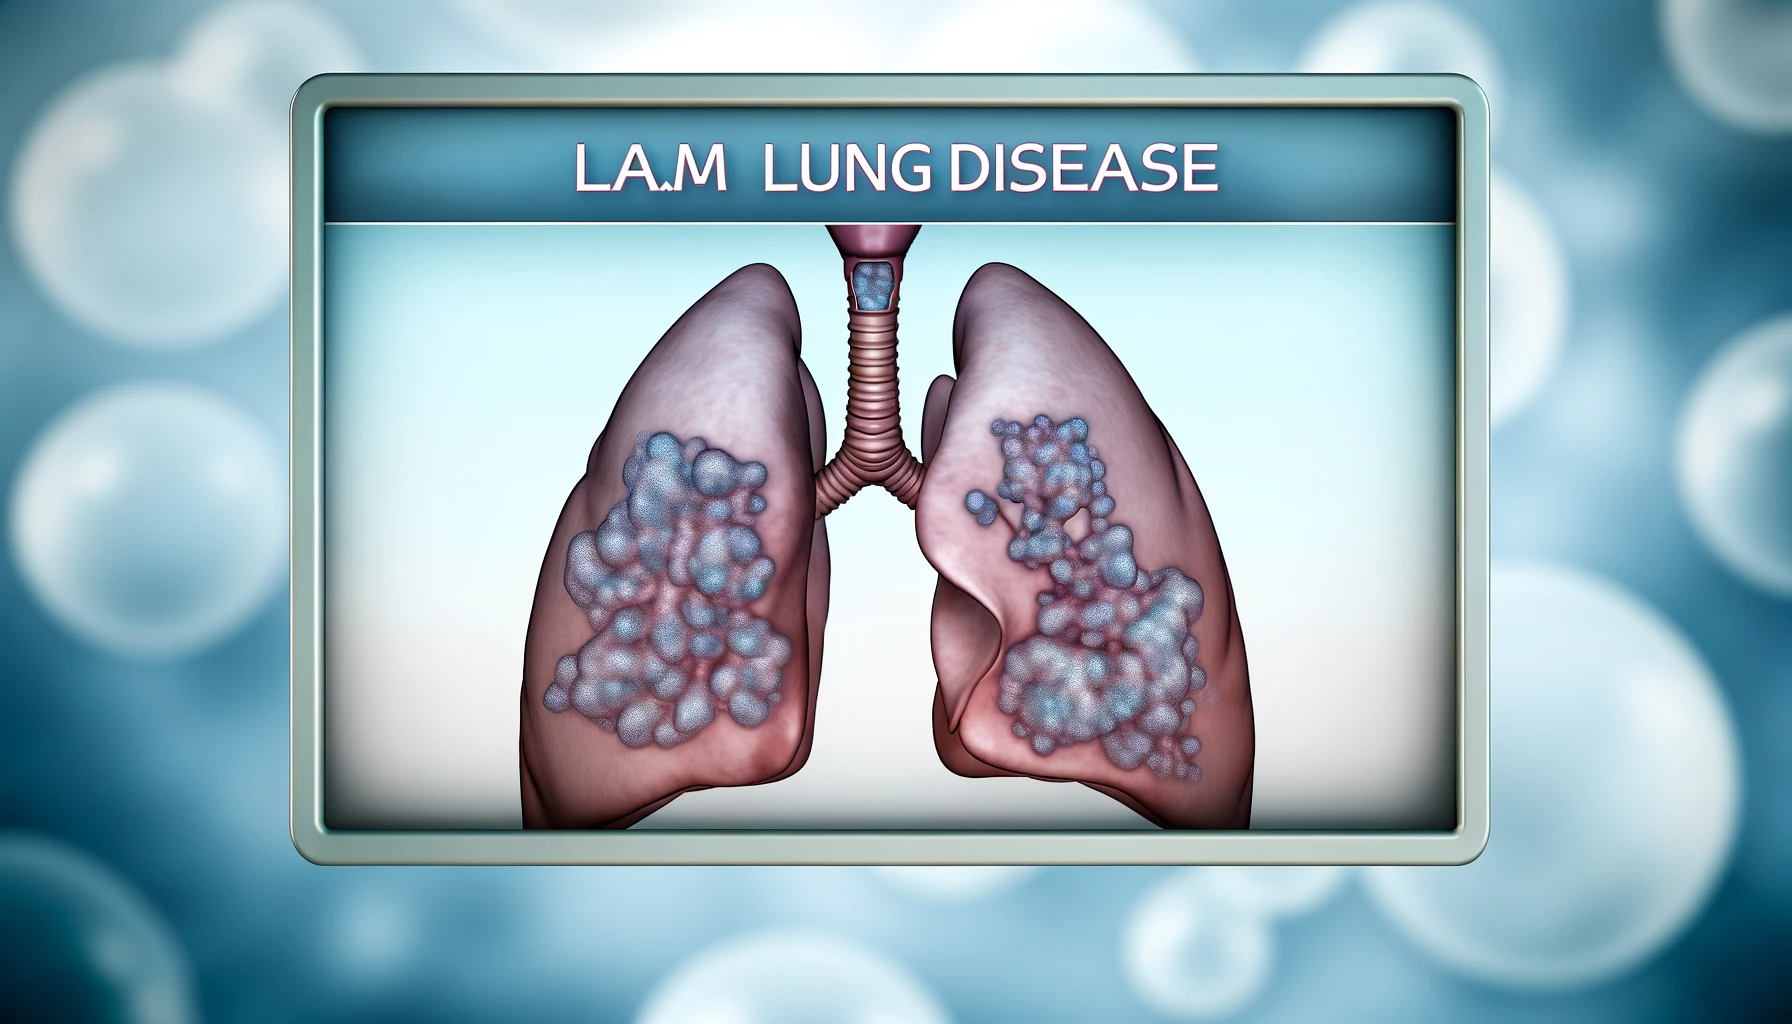 LAM lung disease